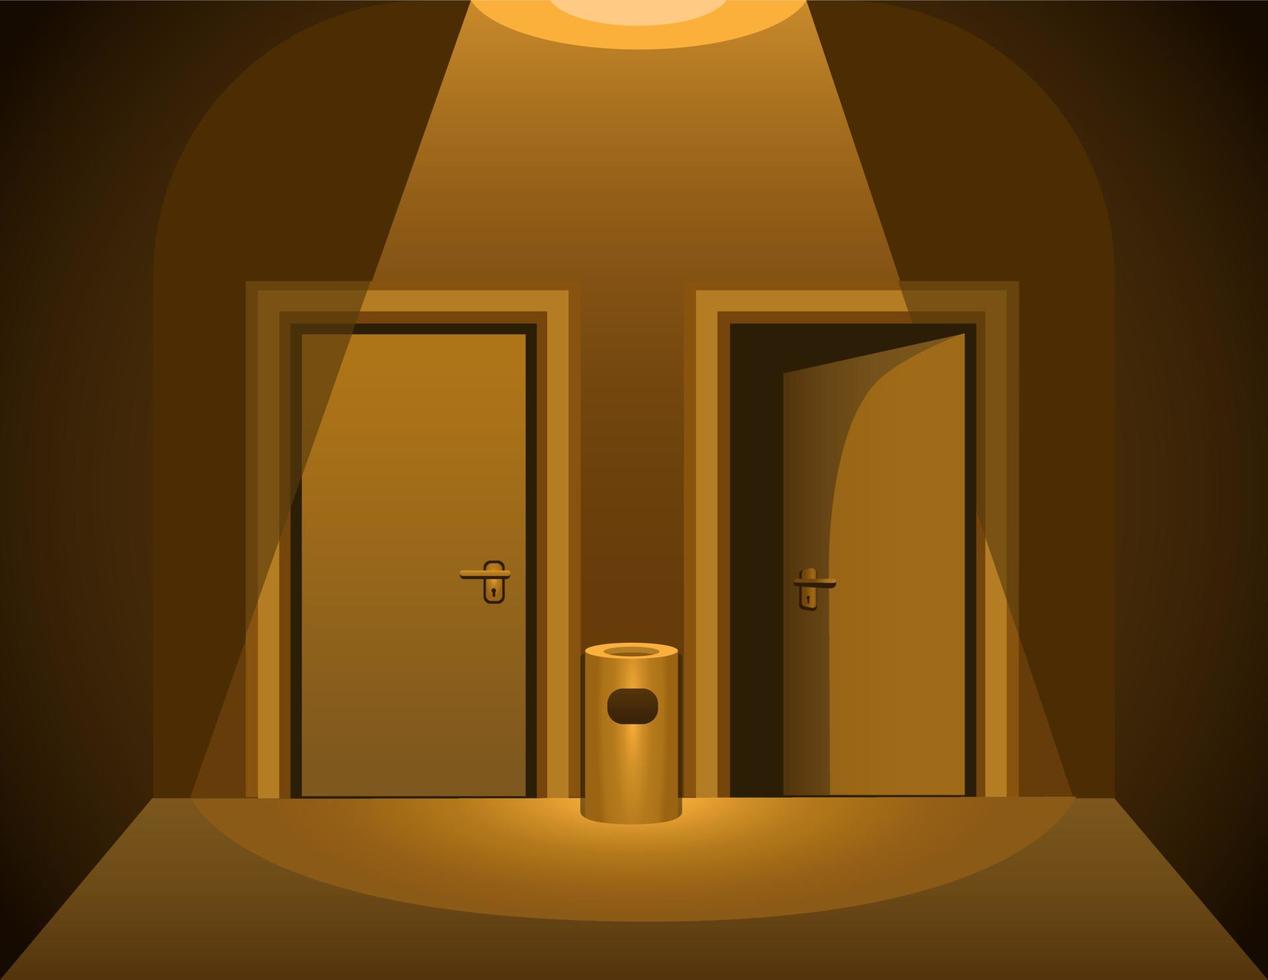 Two Door Dark Room. Toilet or Hotel room horror scene background illustration vector